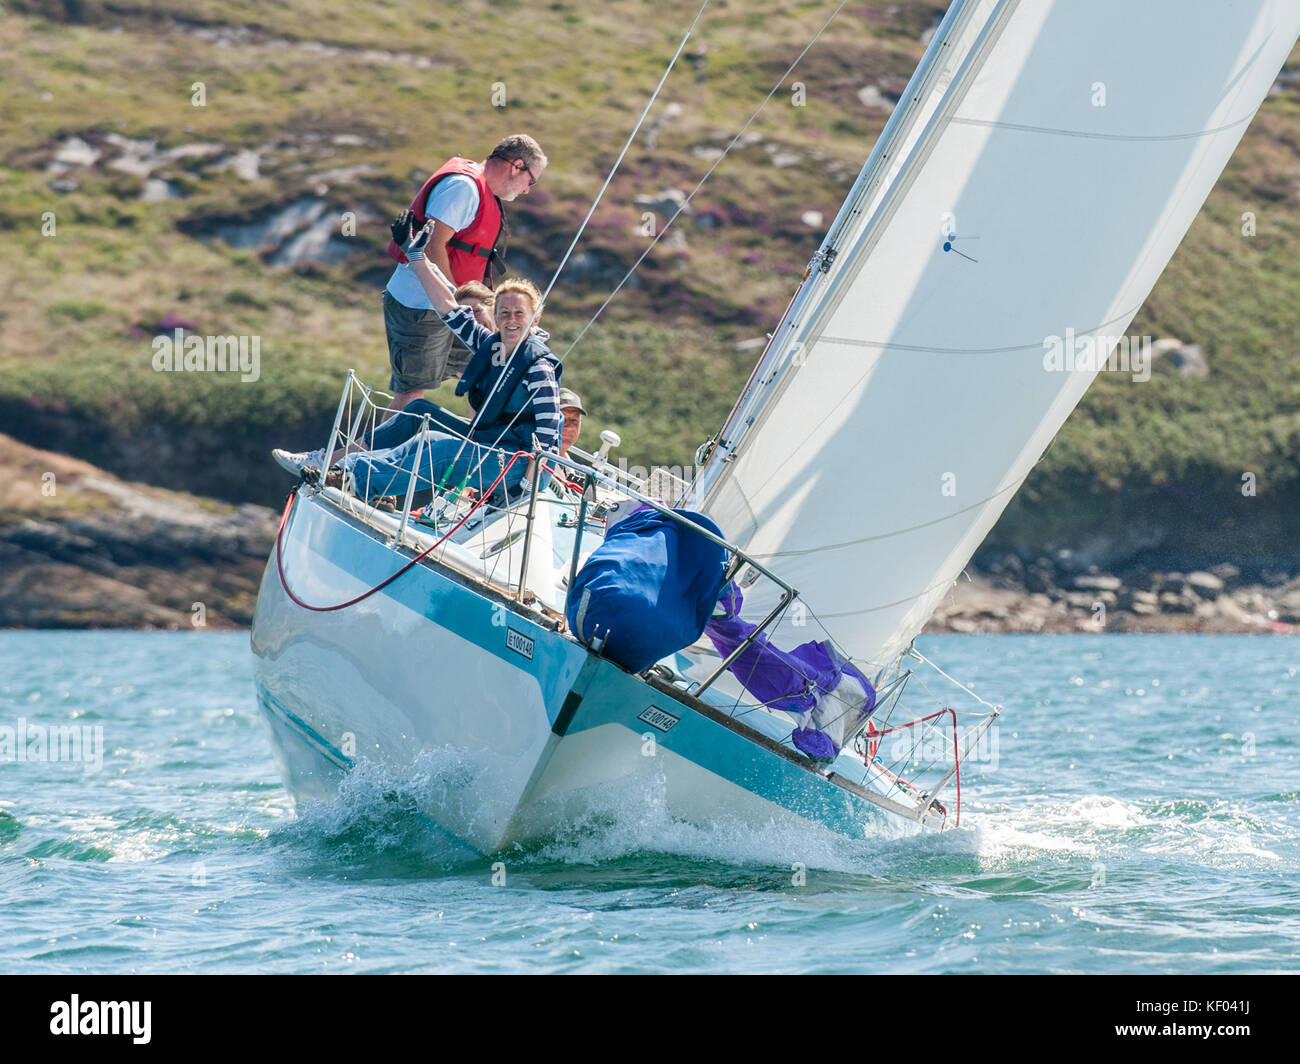 Sailing yacht "stregoneria" racing durante il 2017 Schull vitelli settimana, Schull, West Cork, Irlanda. Foto Stock